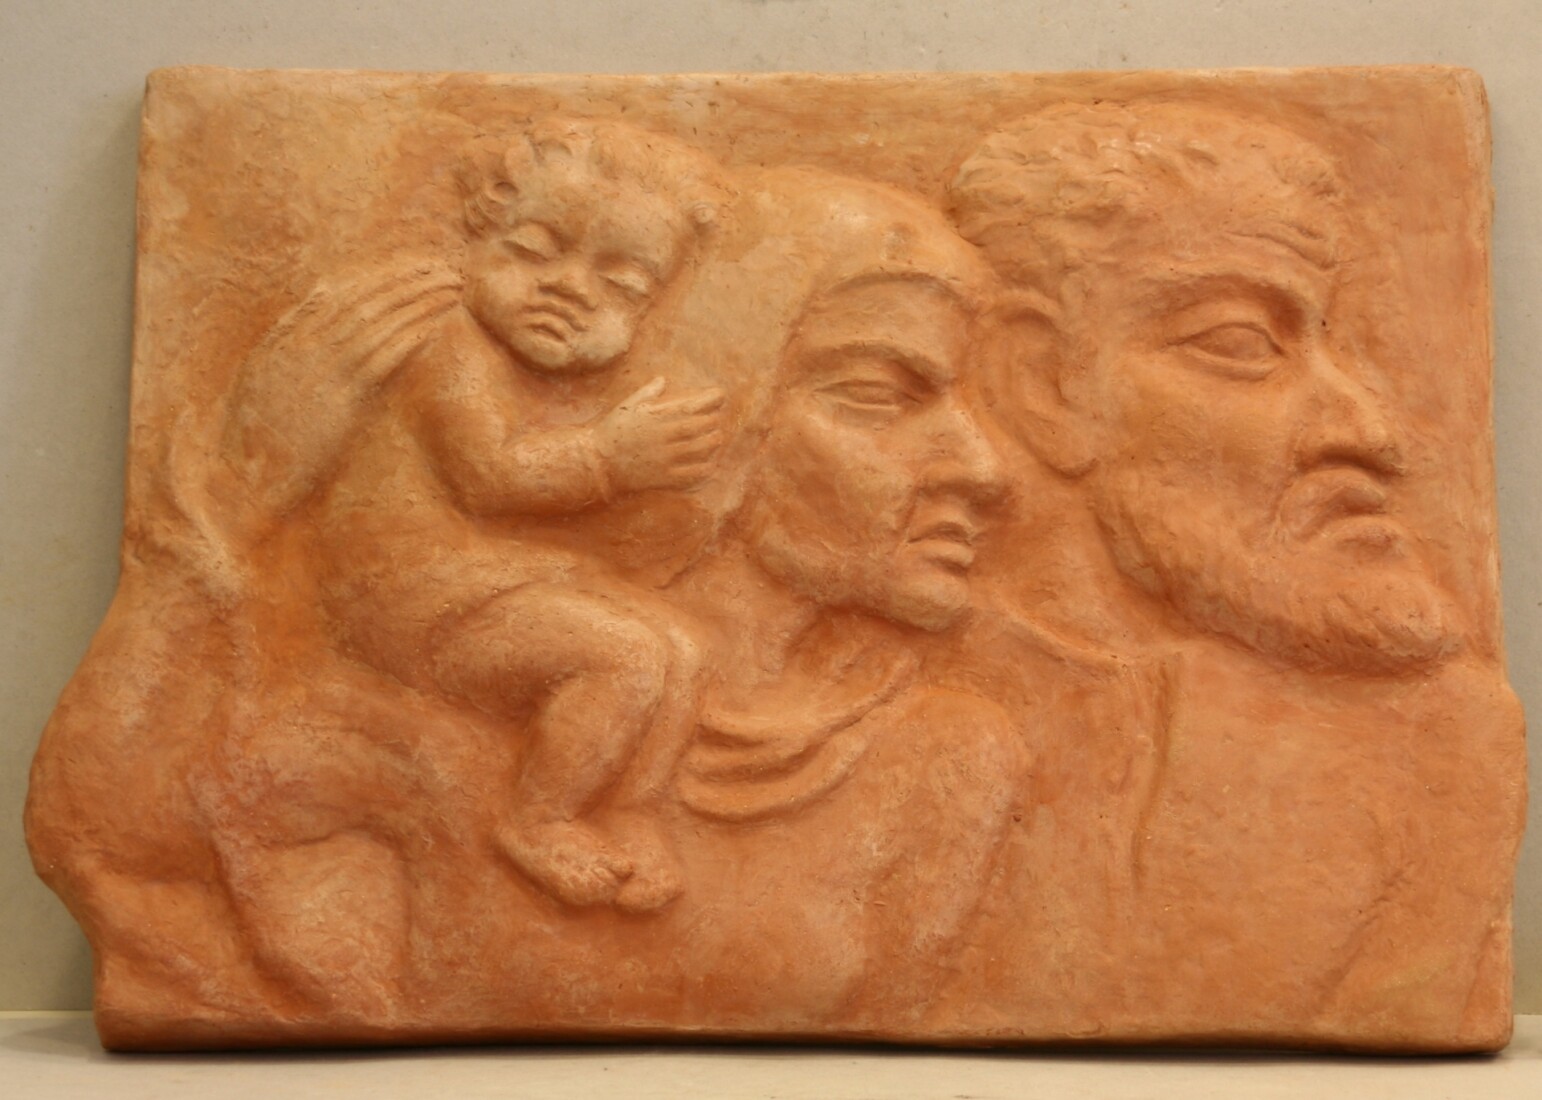 Ceramic art work pressed into a ceramic or plaster mould